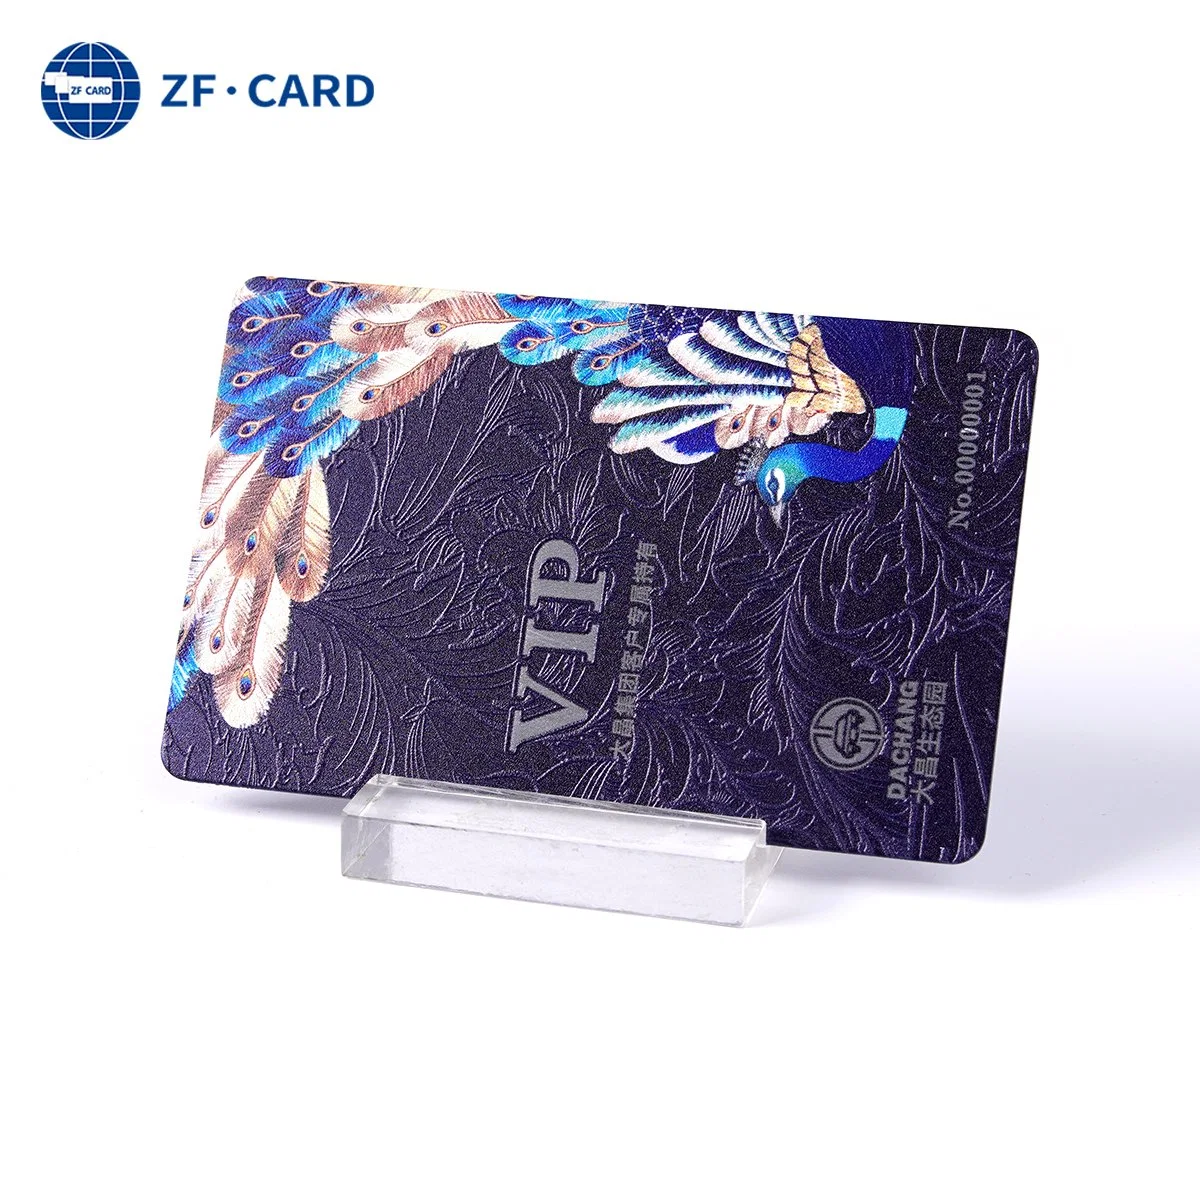 Custom Plastic RFID Business Card Memory Smart Digital PVC NFC Business Card with Logo